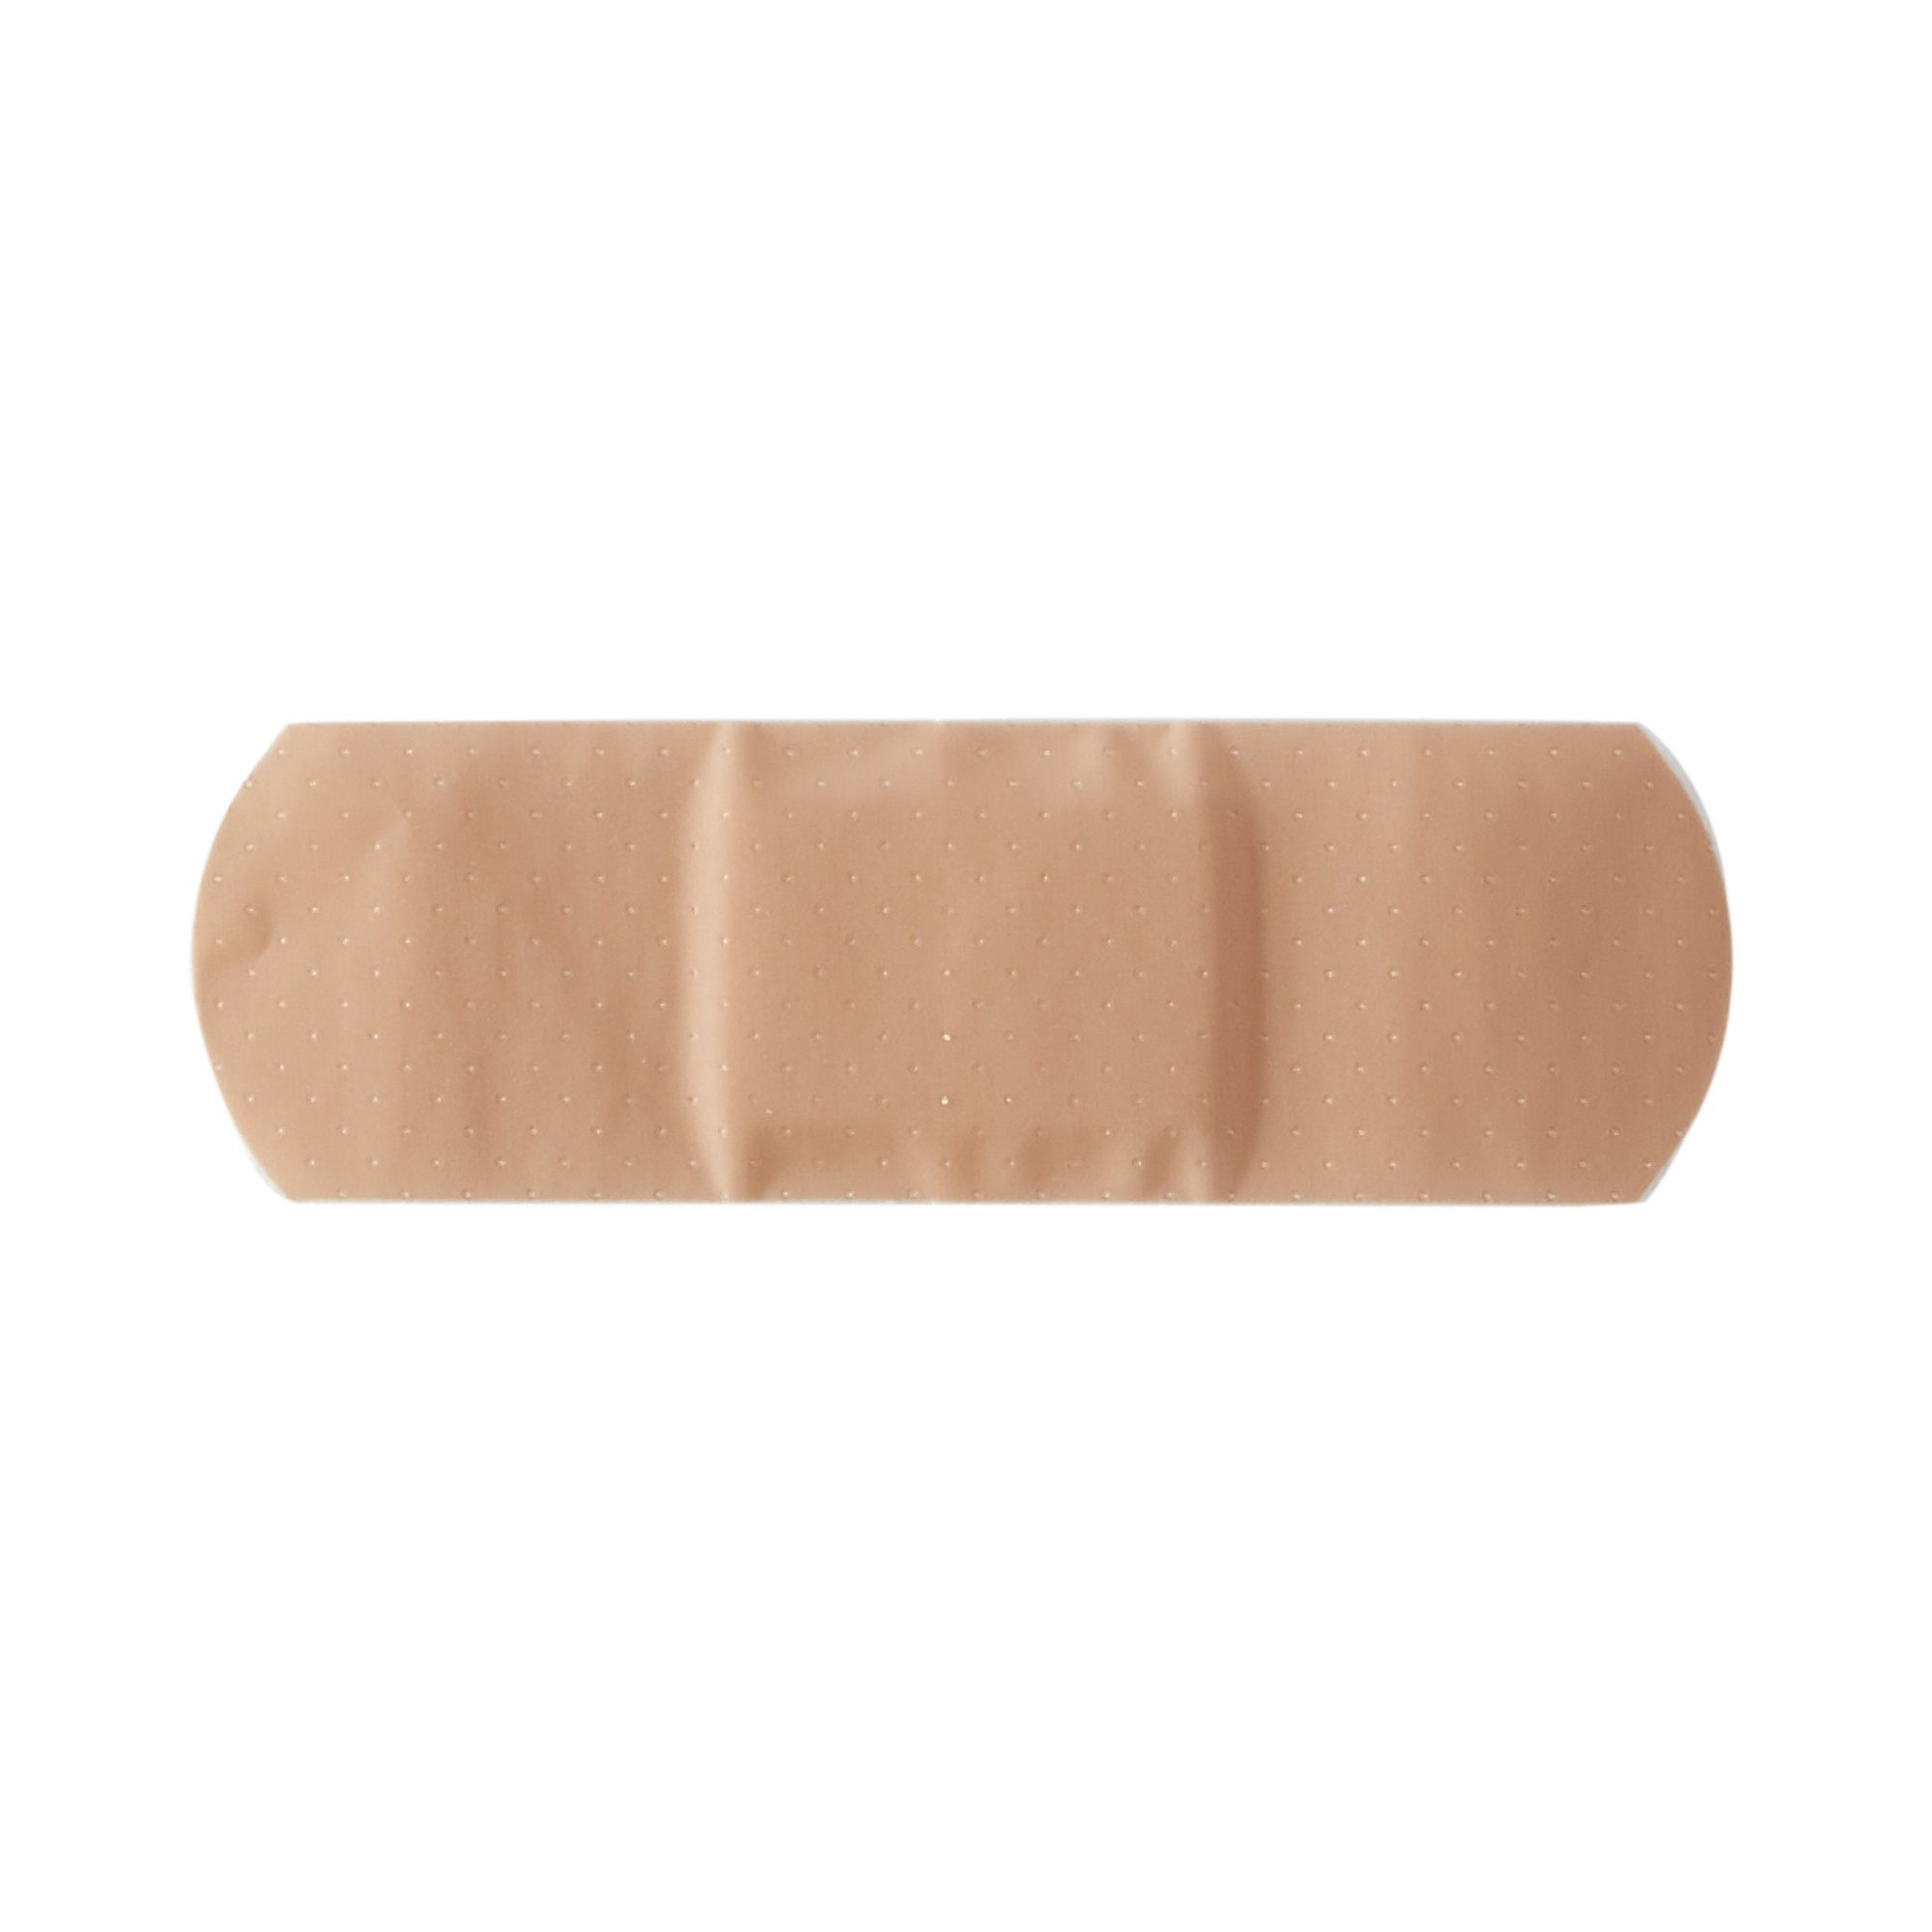 McKesson Adhesive Bandage Strips, 1" x 3" - 100 ct